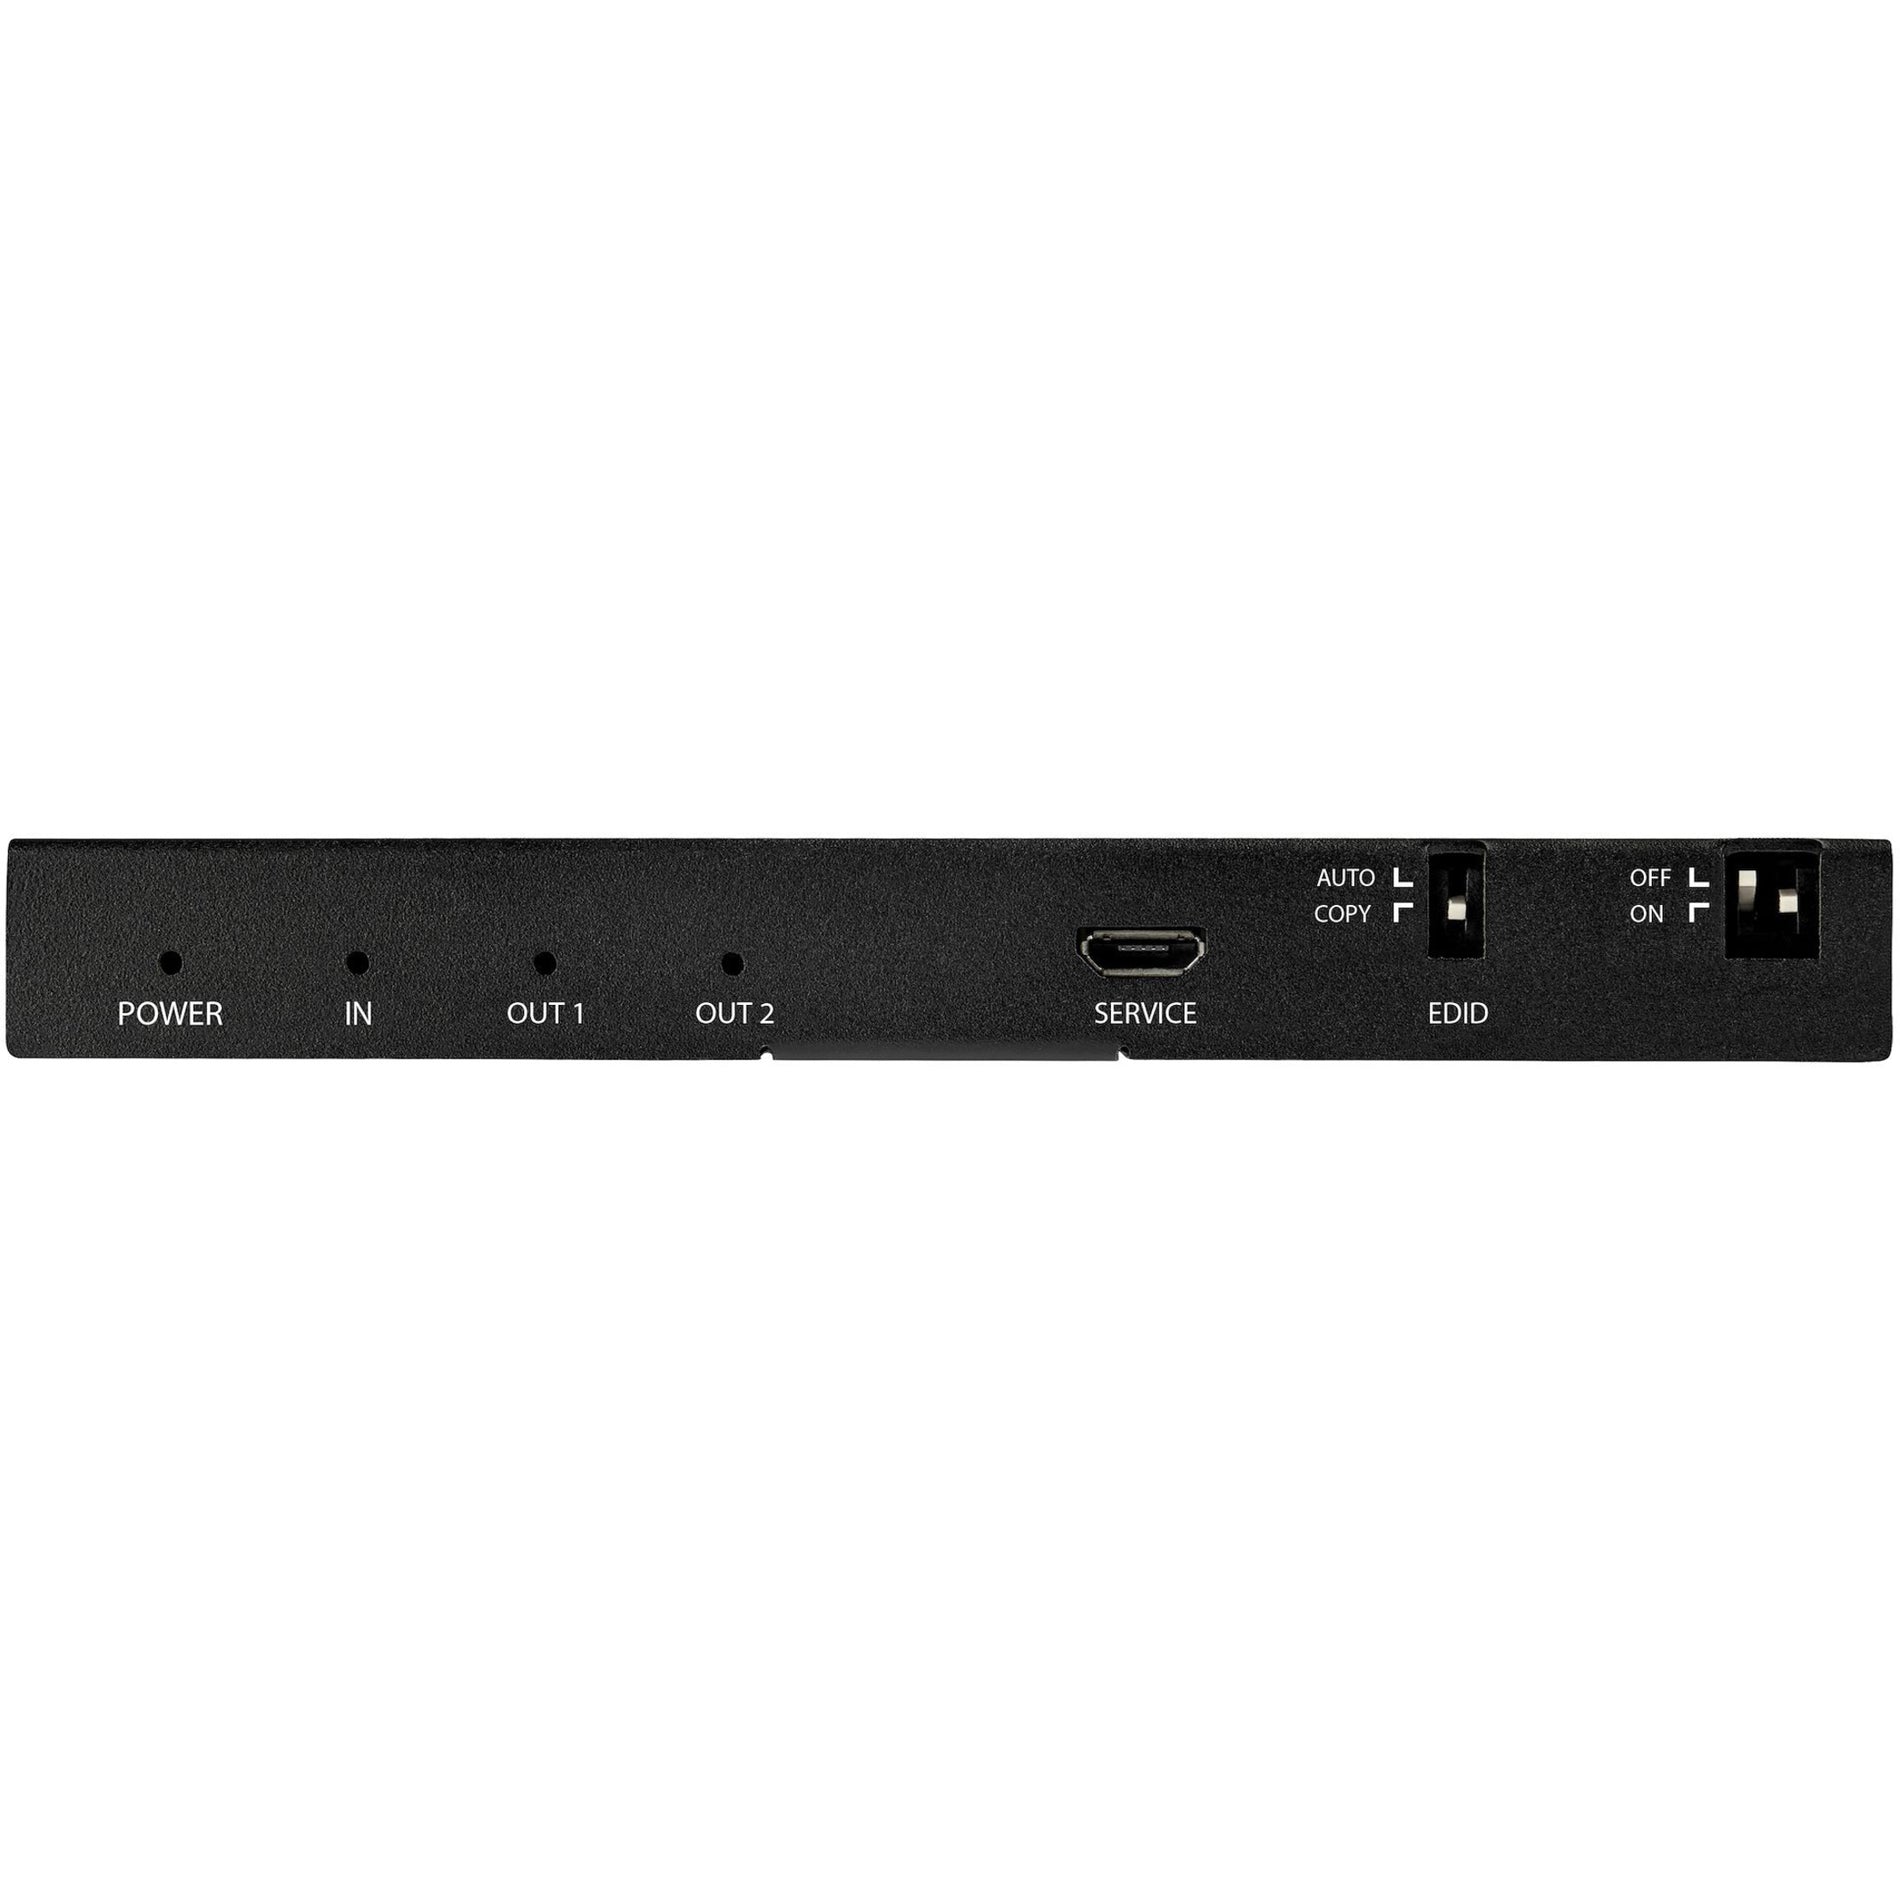 StarTech.com ST122HD20S 2-Port HDMI Splitter - 4K 60Hz with Built-In Scaler, HDCP 2.2, 7.1 Surround Sound